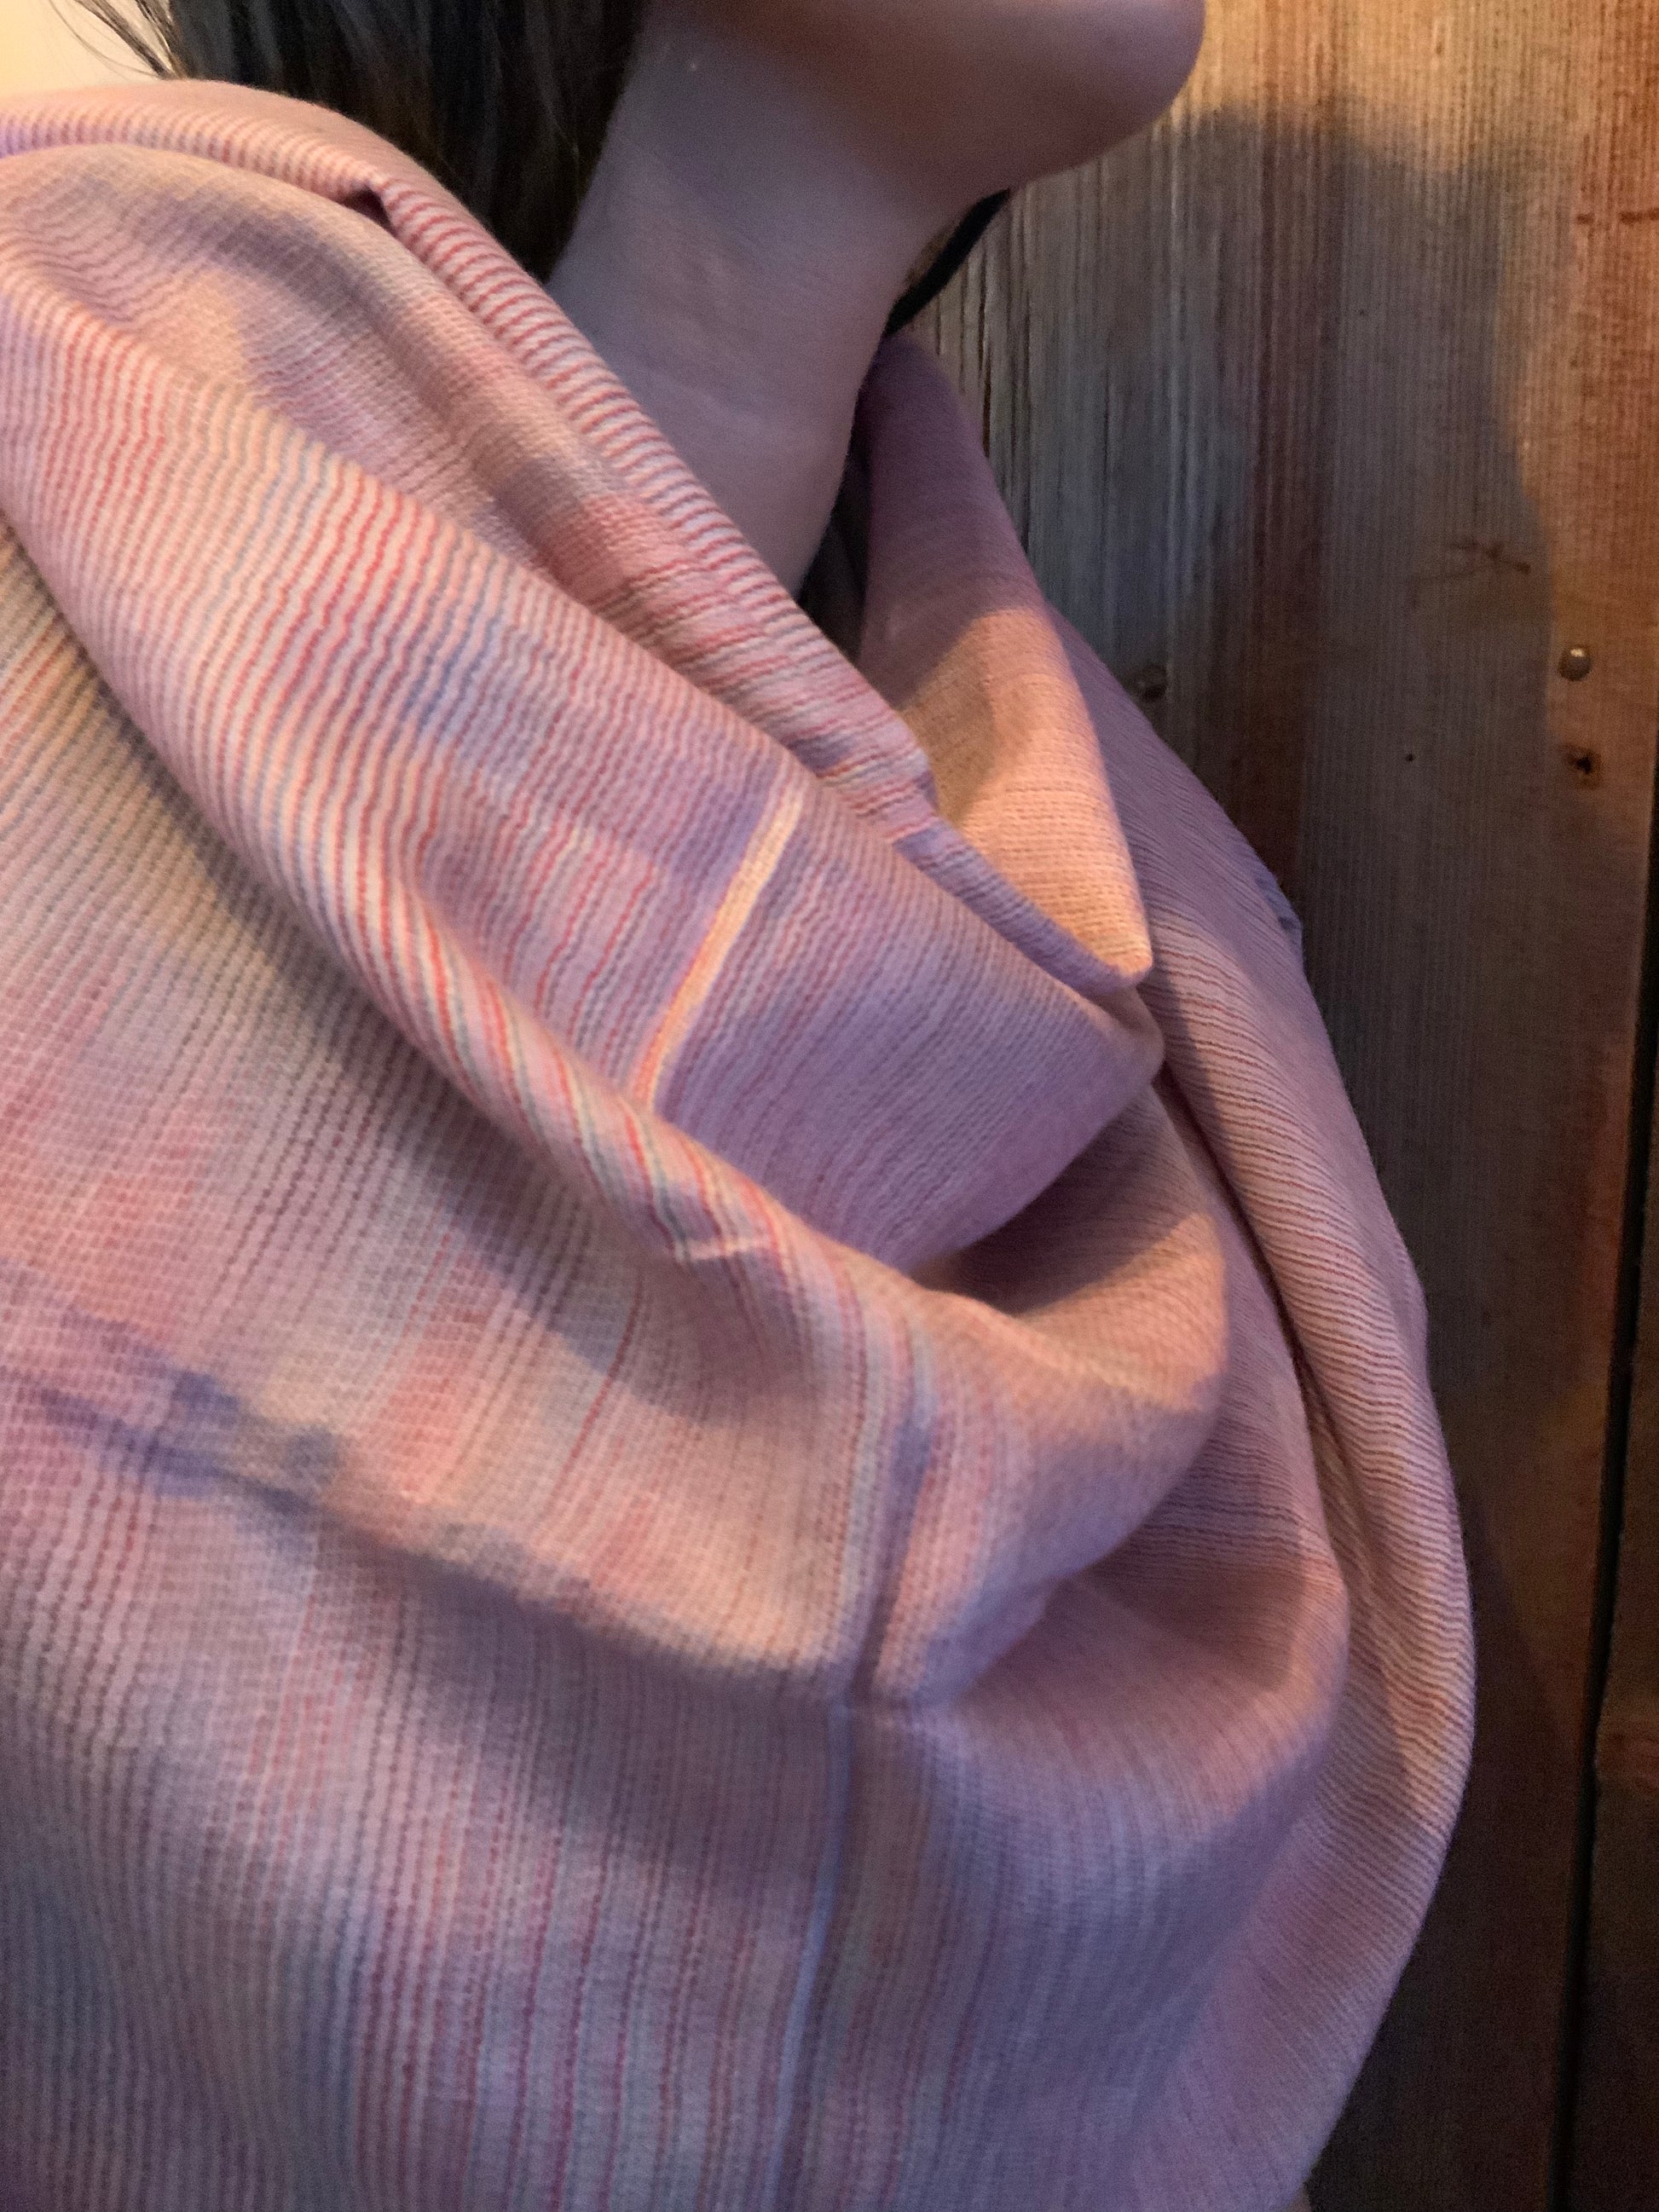 Breezy Kashmir shawl with Pink stripes #PinkOnPink #kashmirShawl #ShawlLove - DharBazaar